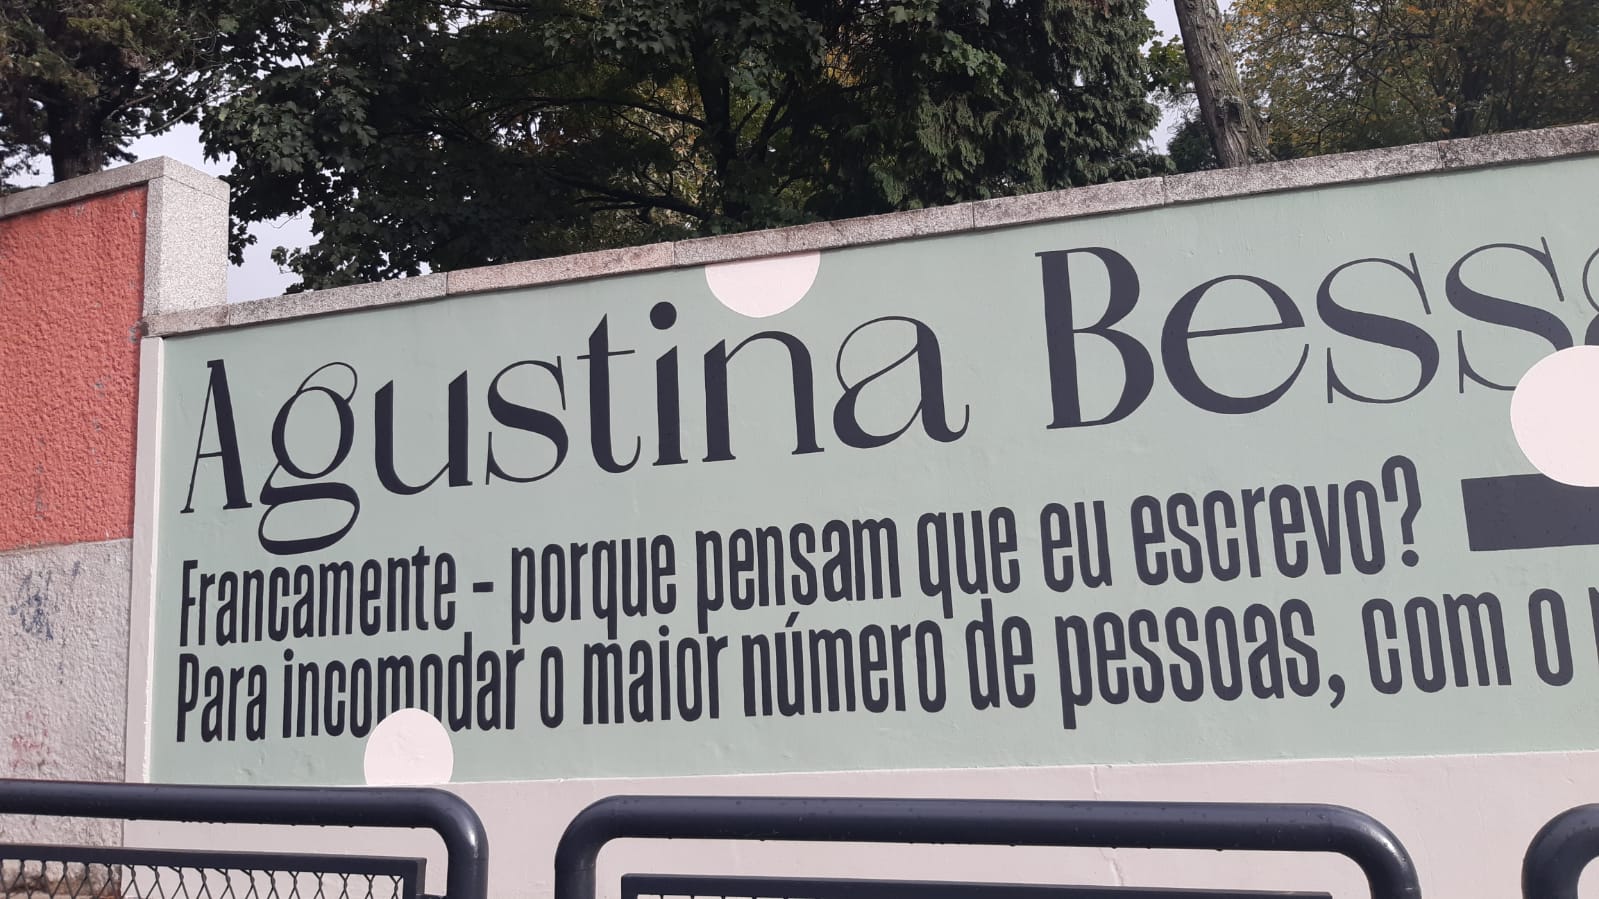 Agustina Bessa-Luís